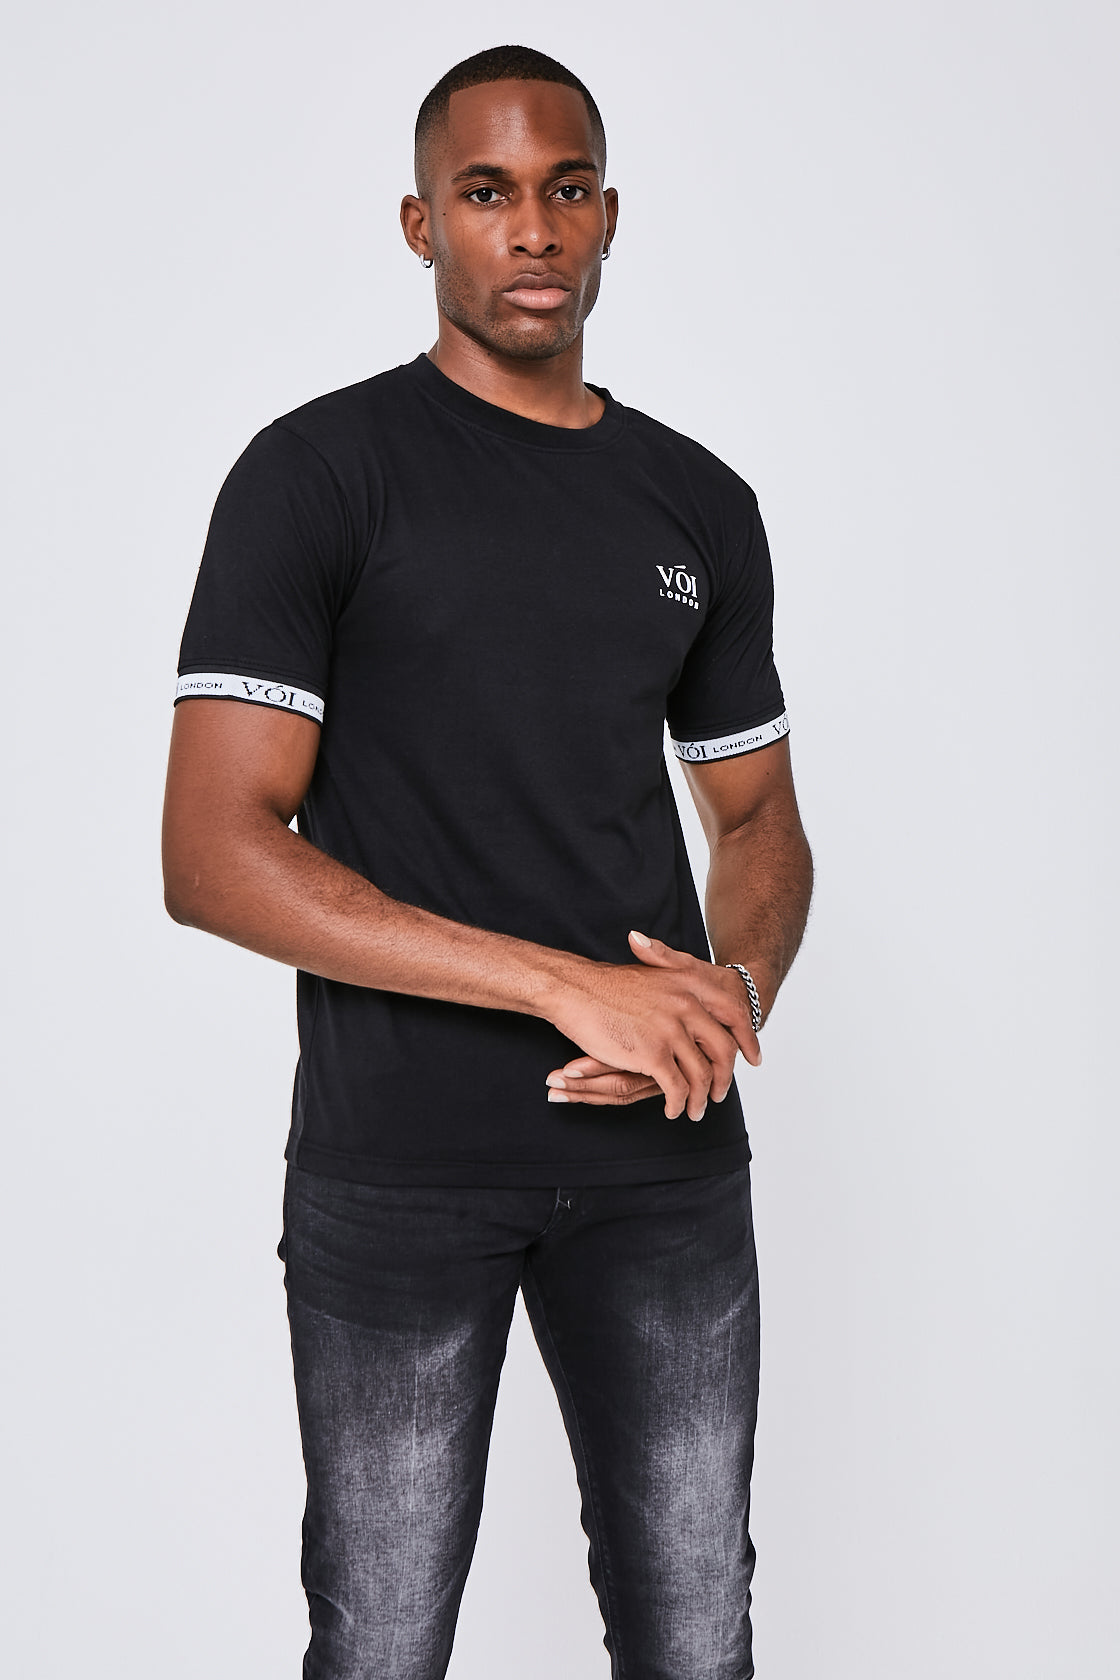 Wanstead T-Shirt - Solid Black